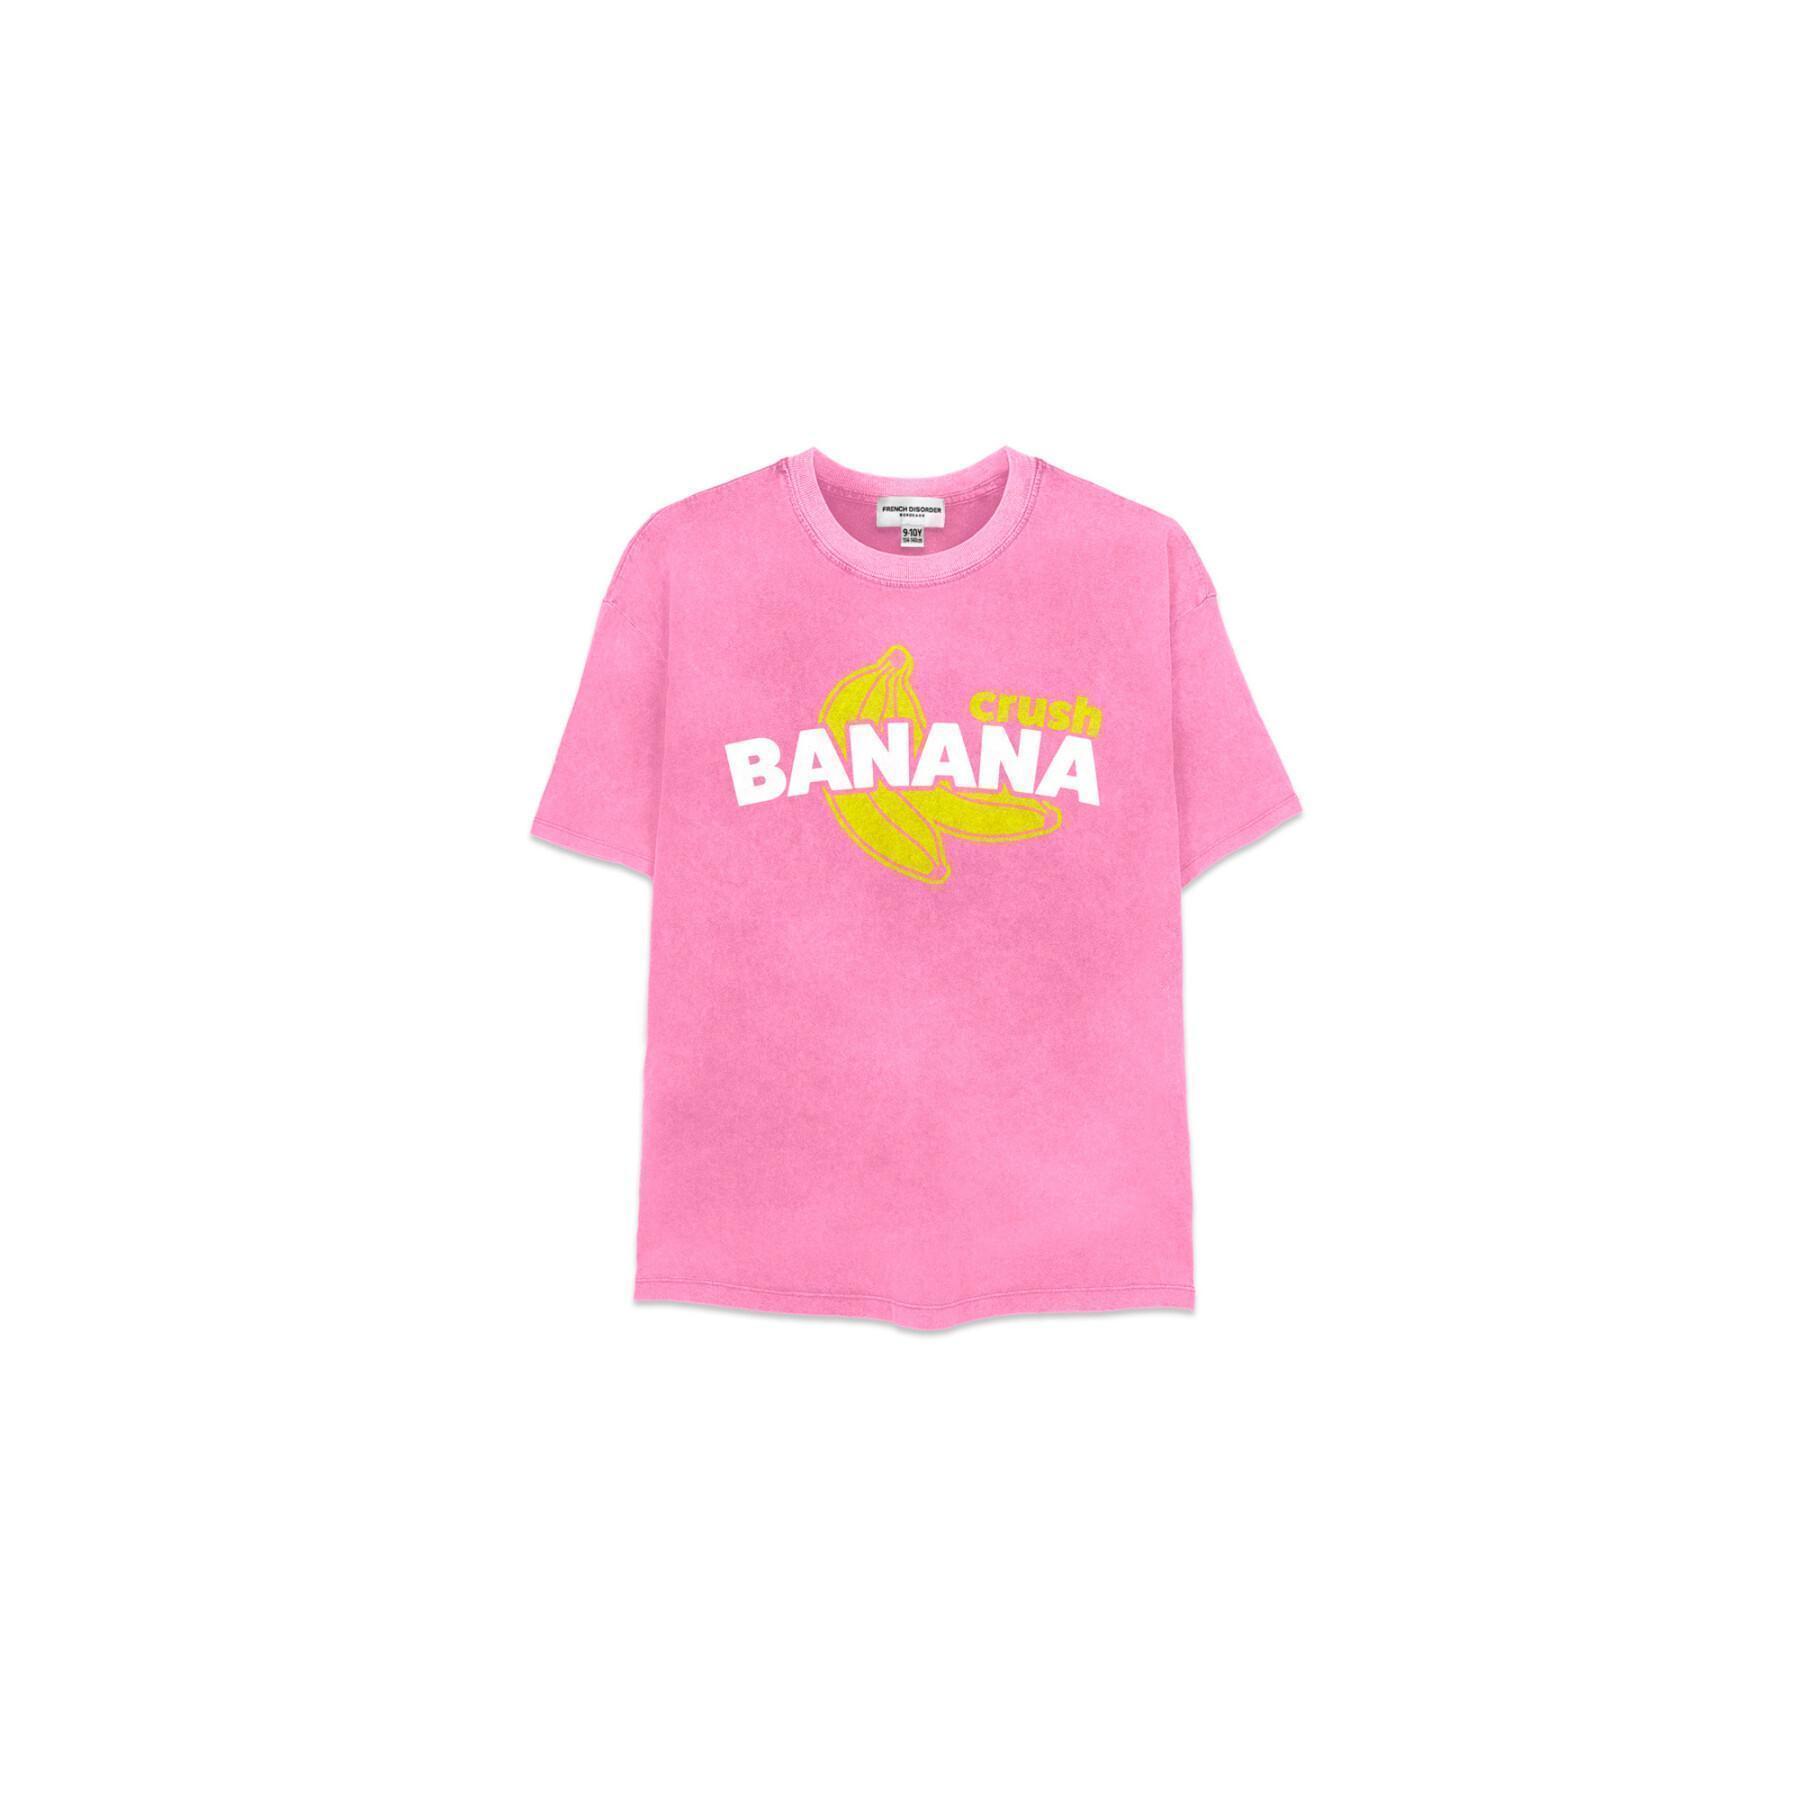 Child's T-shirt French Disorder Banana